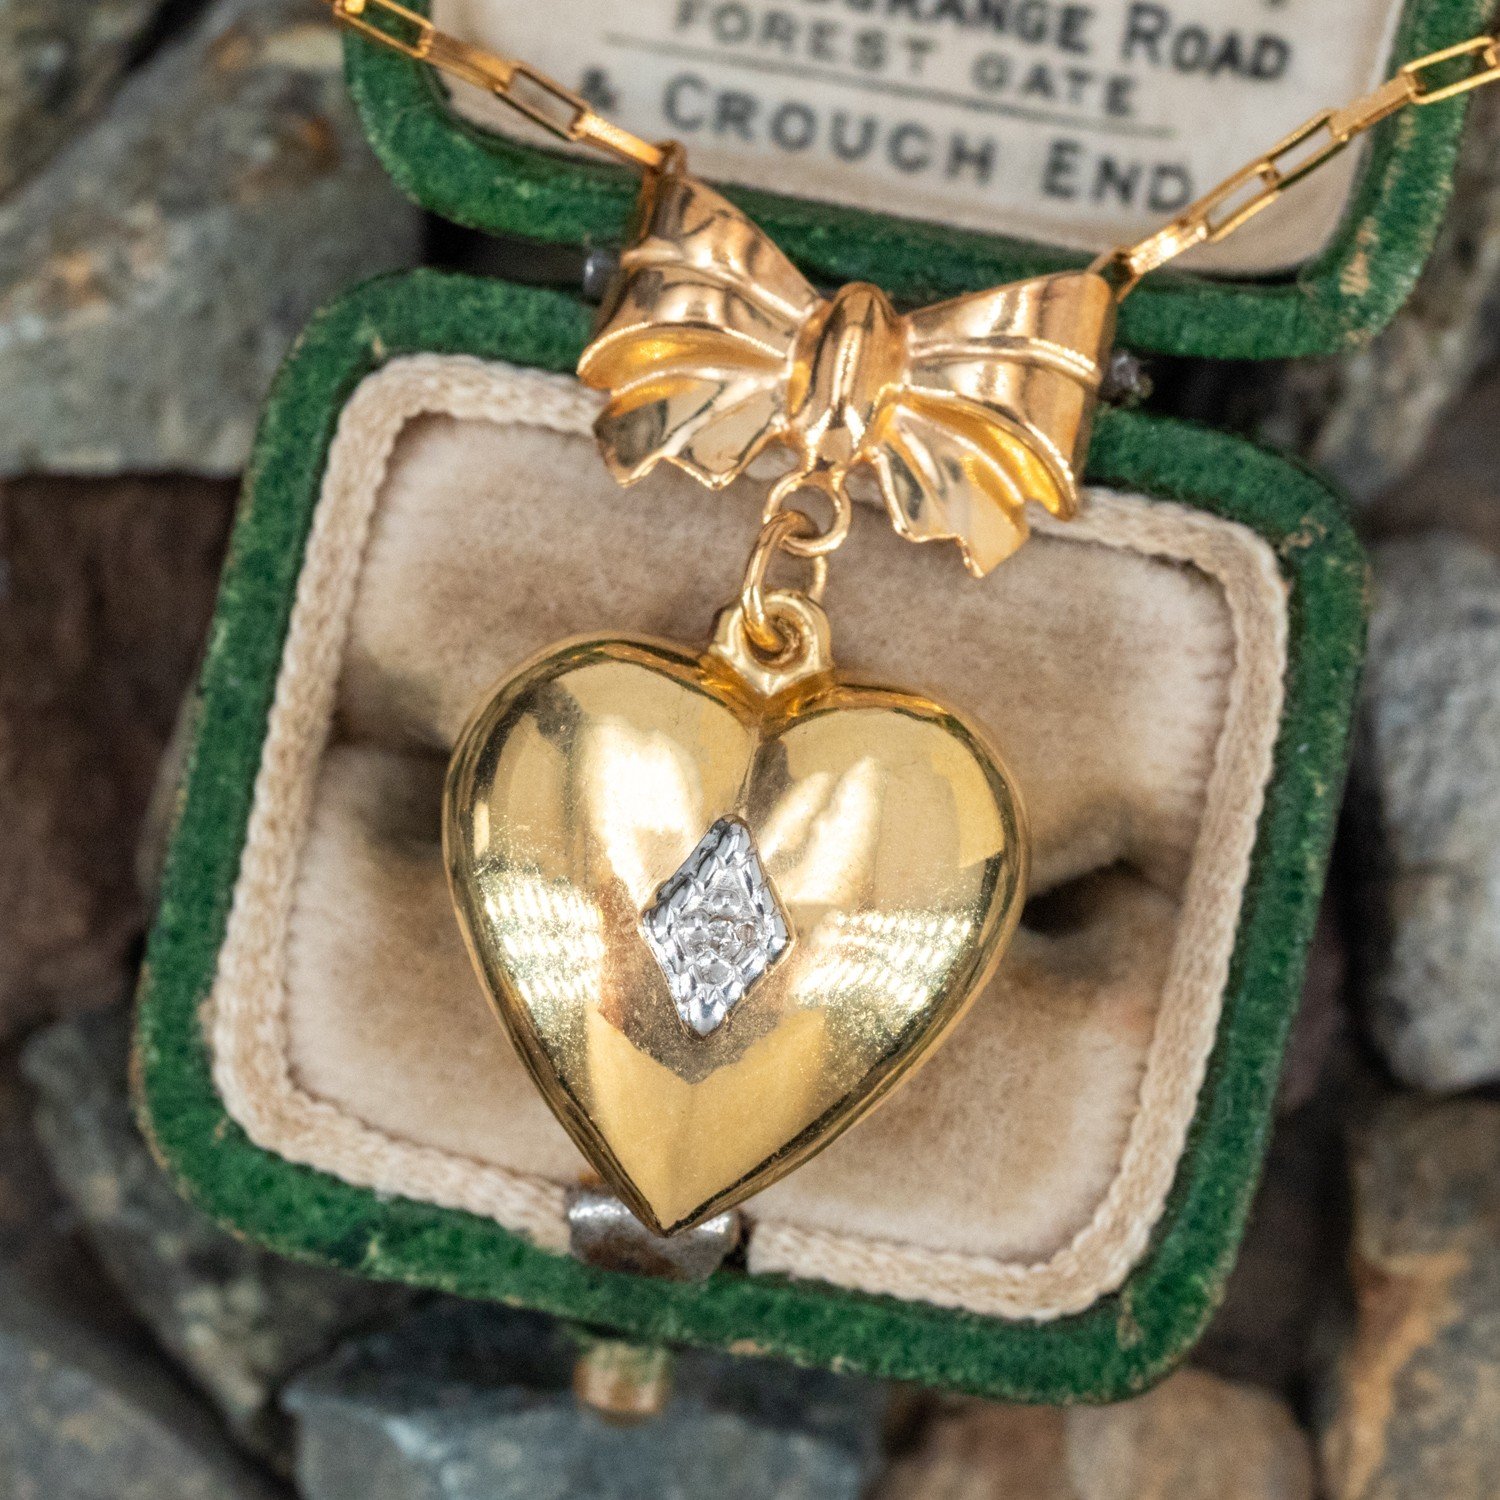 White Gold Heart Locket Charm Pendant